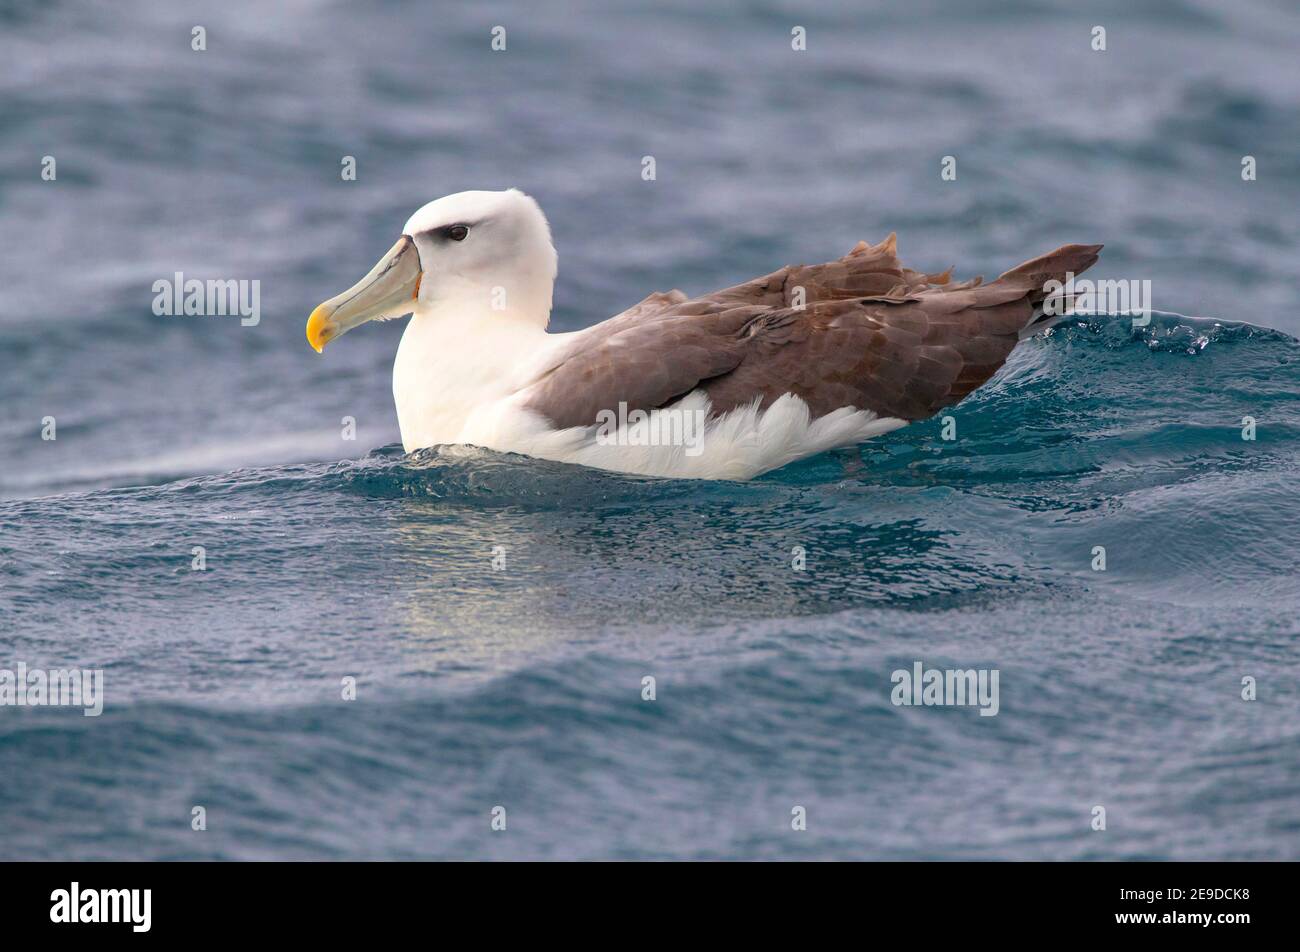 Albatros de tapa blanca (Thalassarche steadi, Thalassarche cauta steadi), adultos nadando en el océano pacífico, Nueva Zelanda, Isla del Sur, Kaikoura Foto de stock